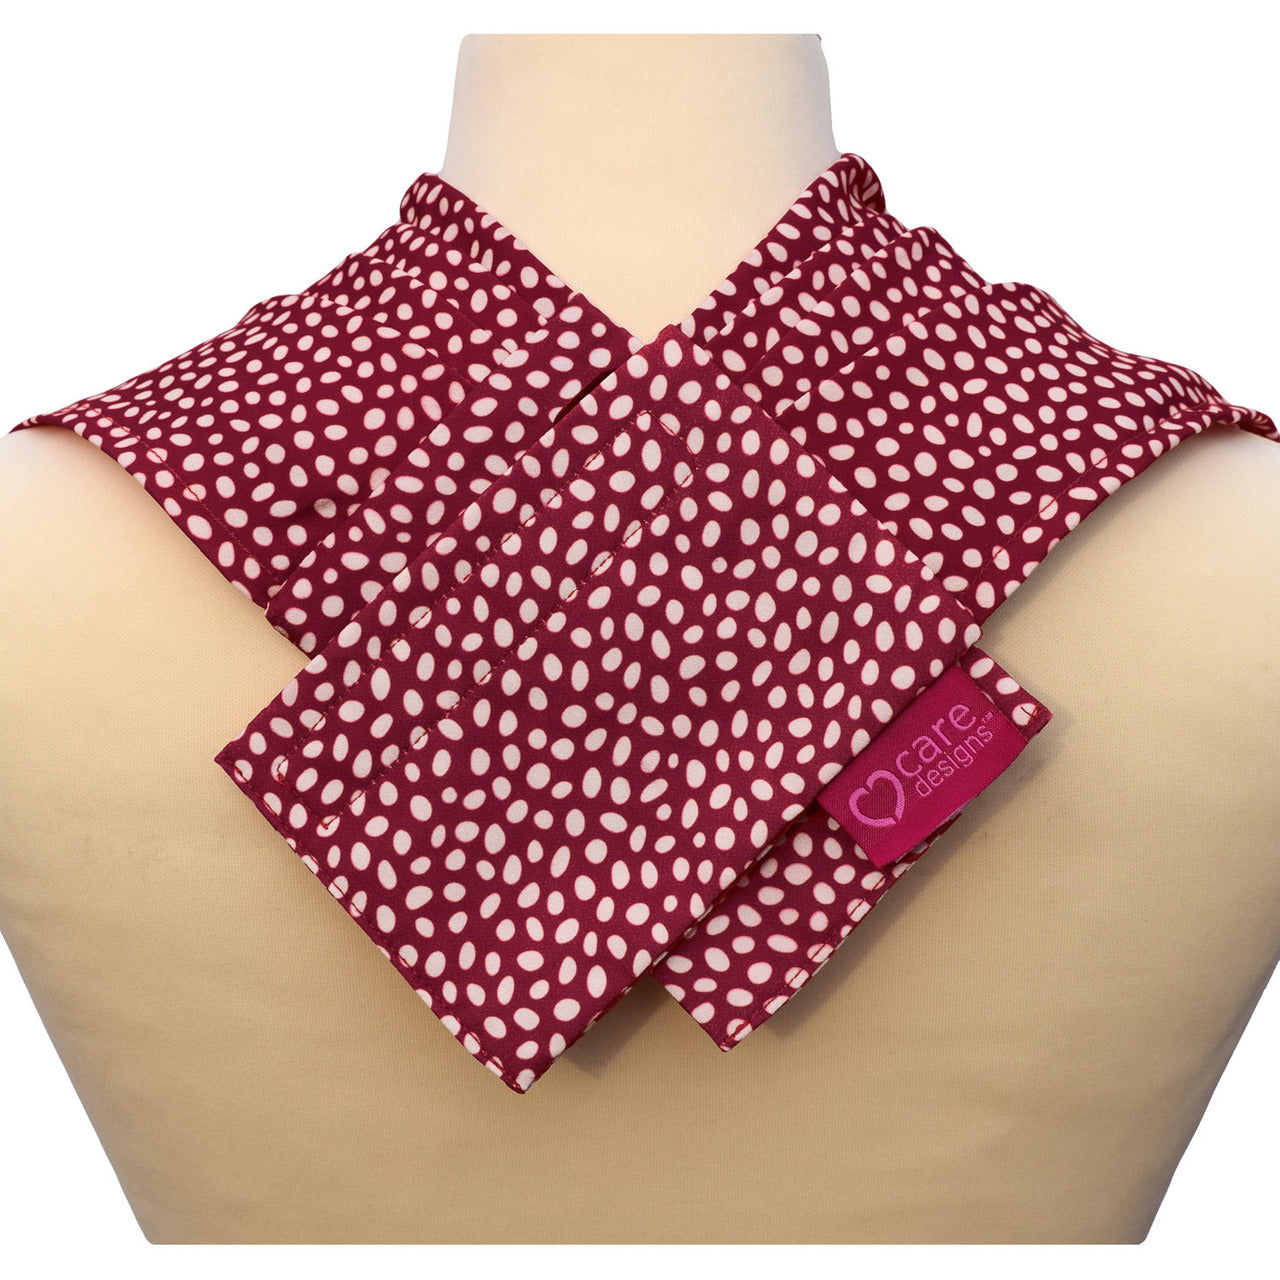 Pashmina scarf style clothing protector - Burgundy Dot (UK VAT Exempt) | Health Care | Care Designs